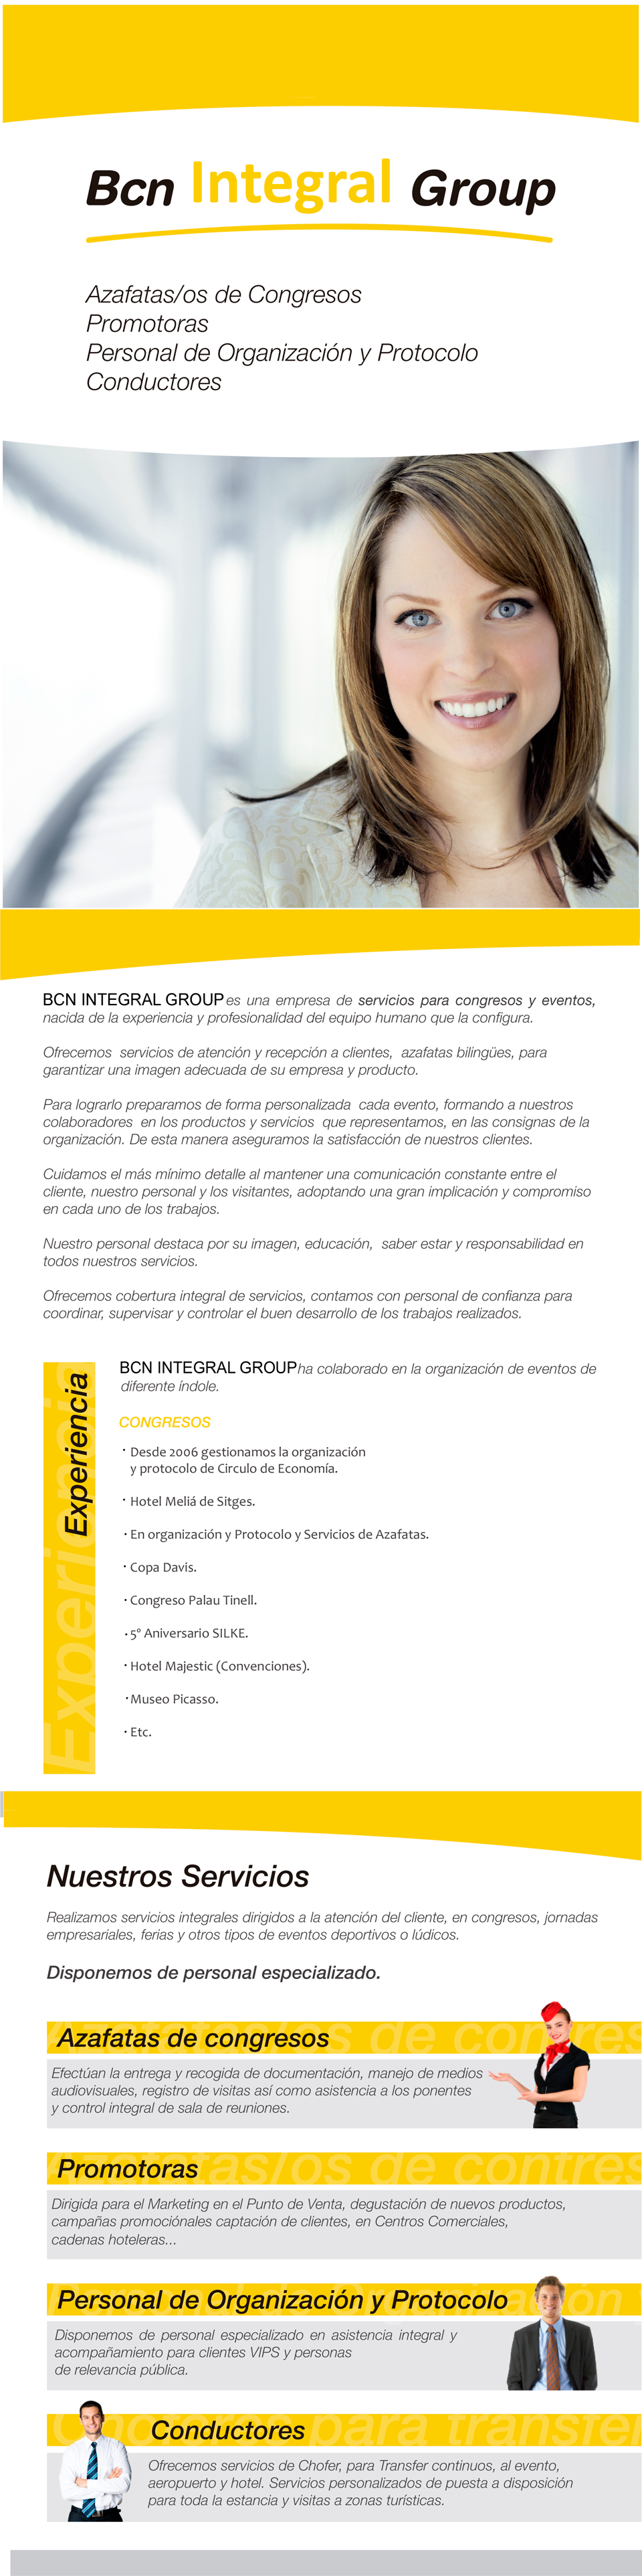 BCN INTEGRAL GROUP